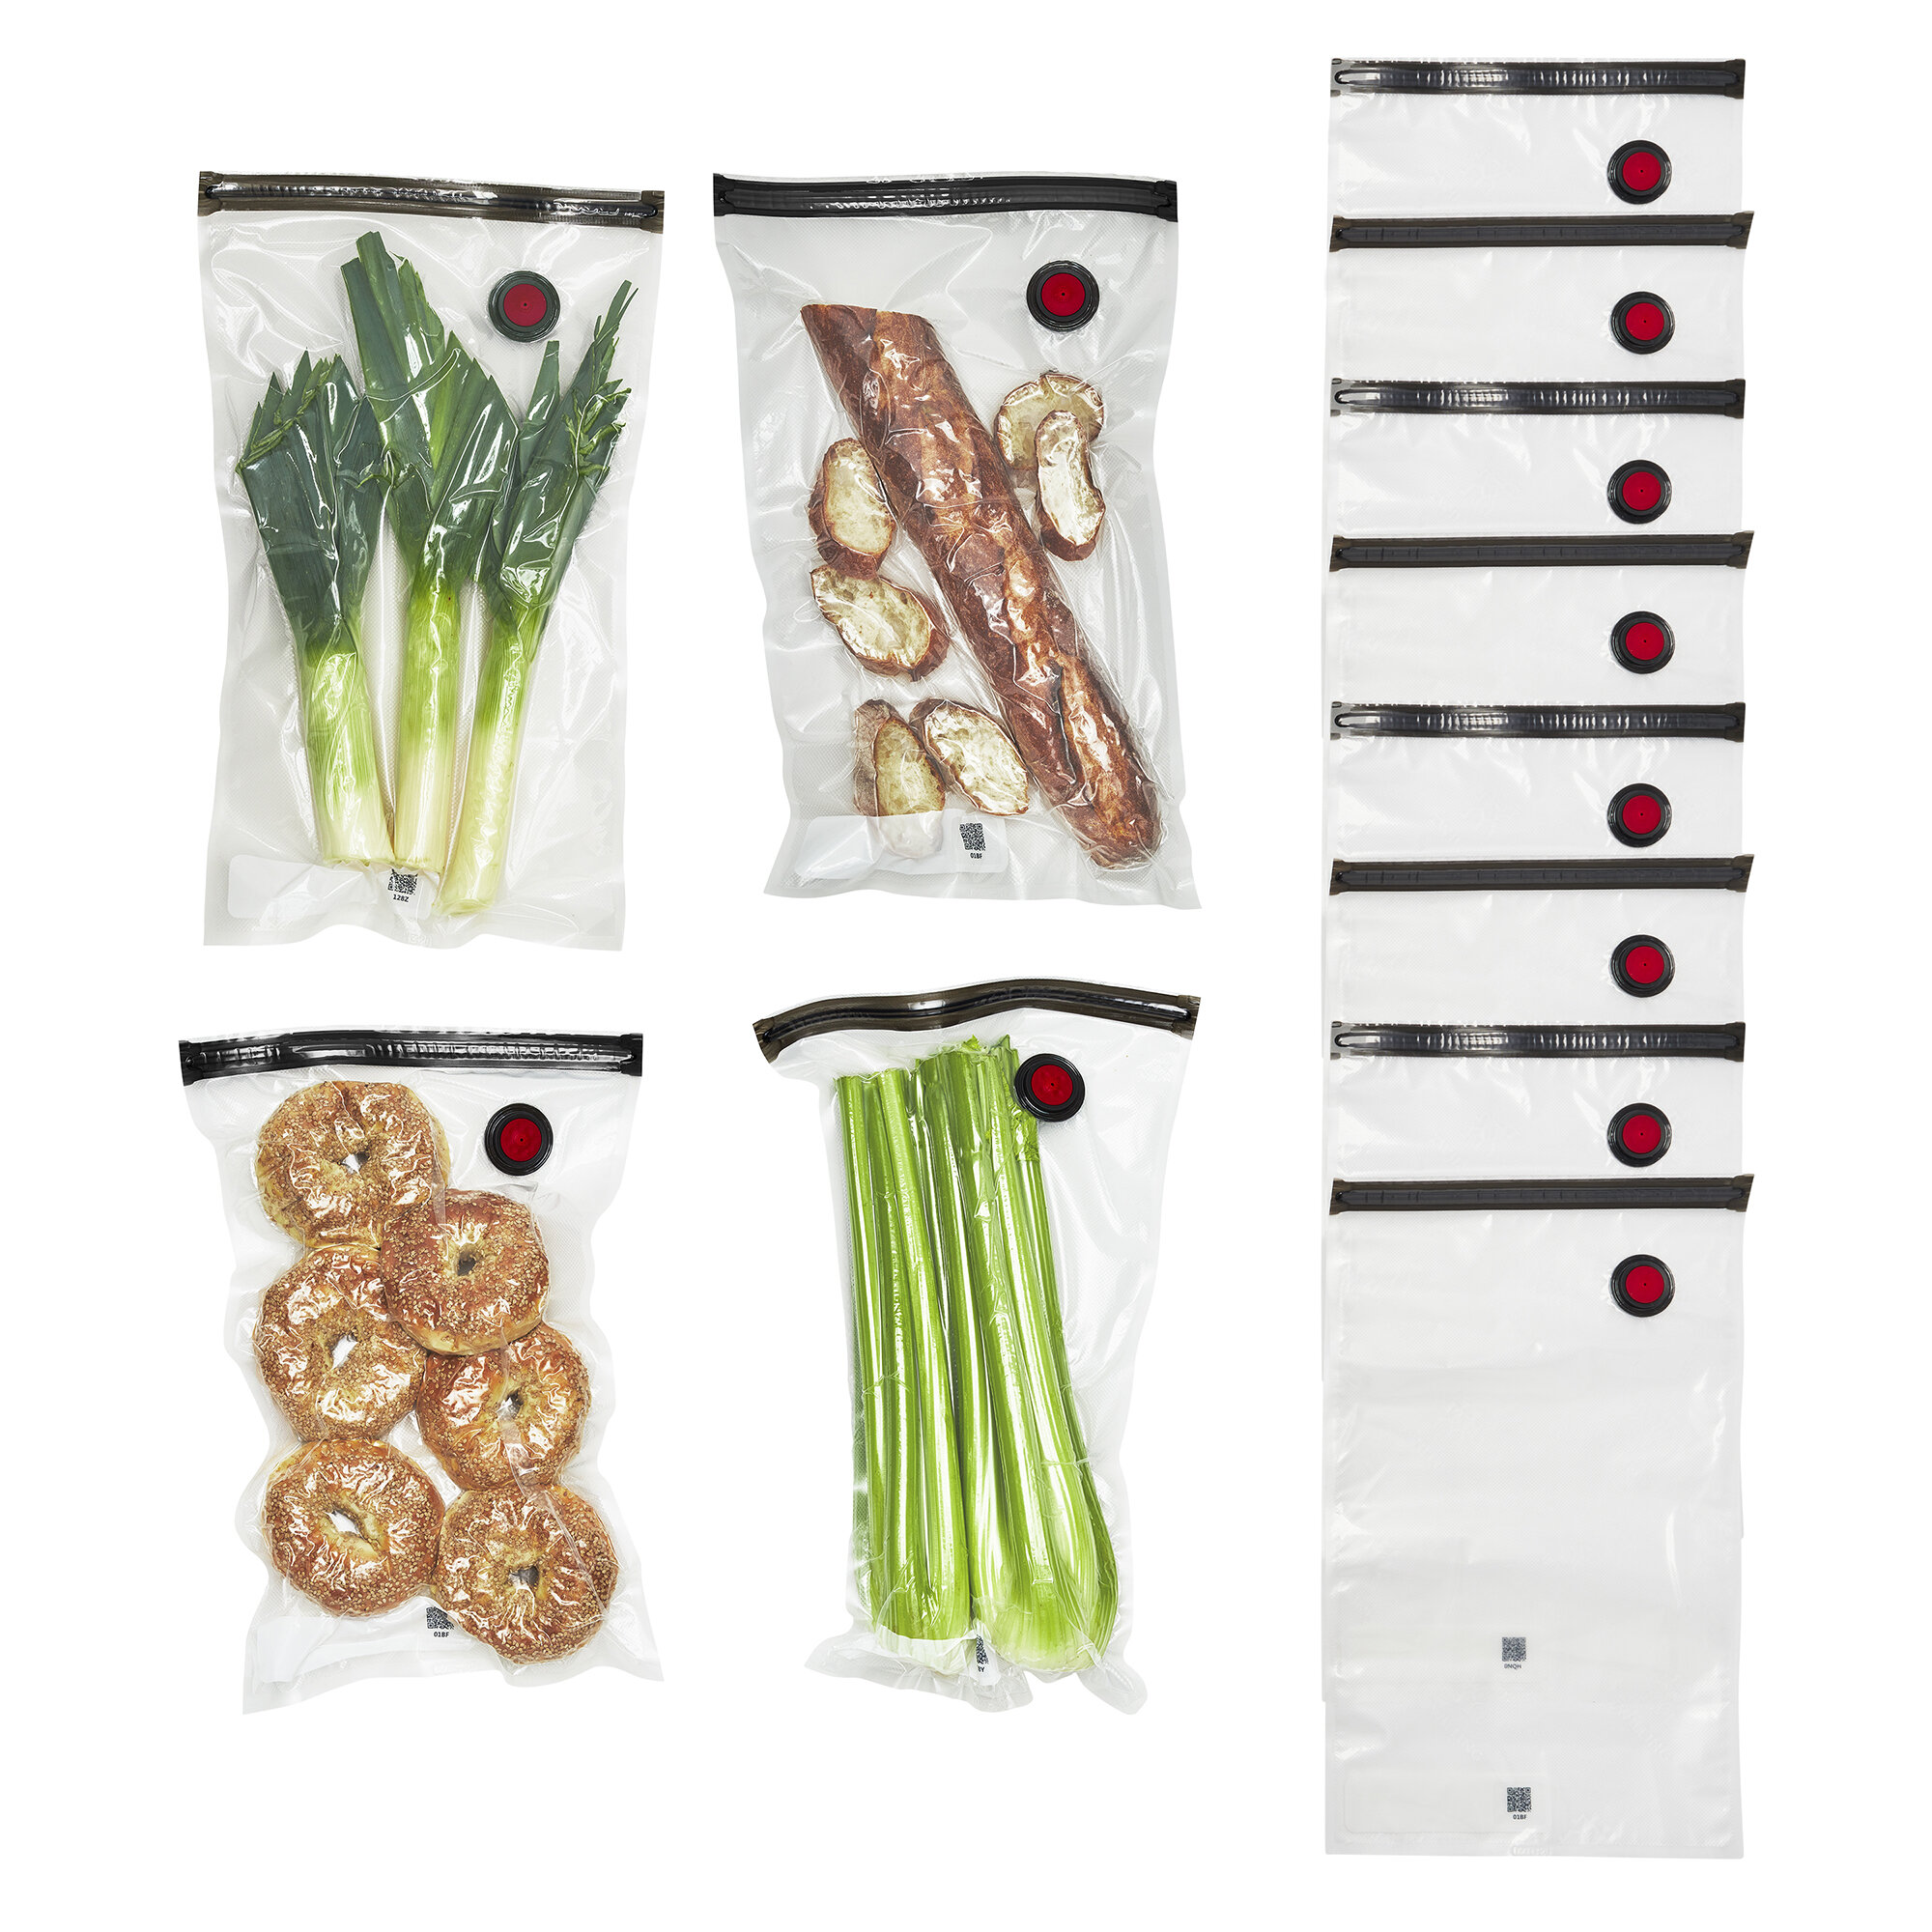  Sous Vide Bags, 42 PCS Electric Food Vacuum Sealer Set